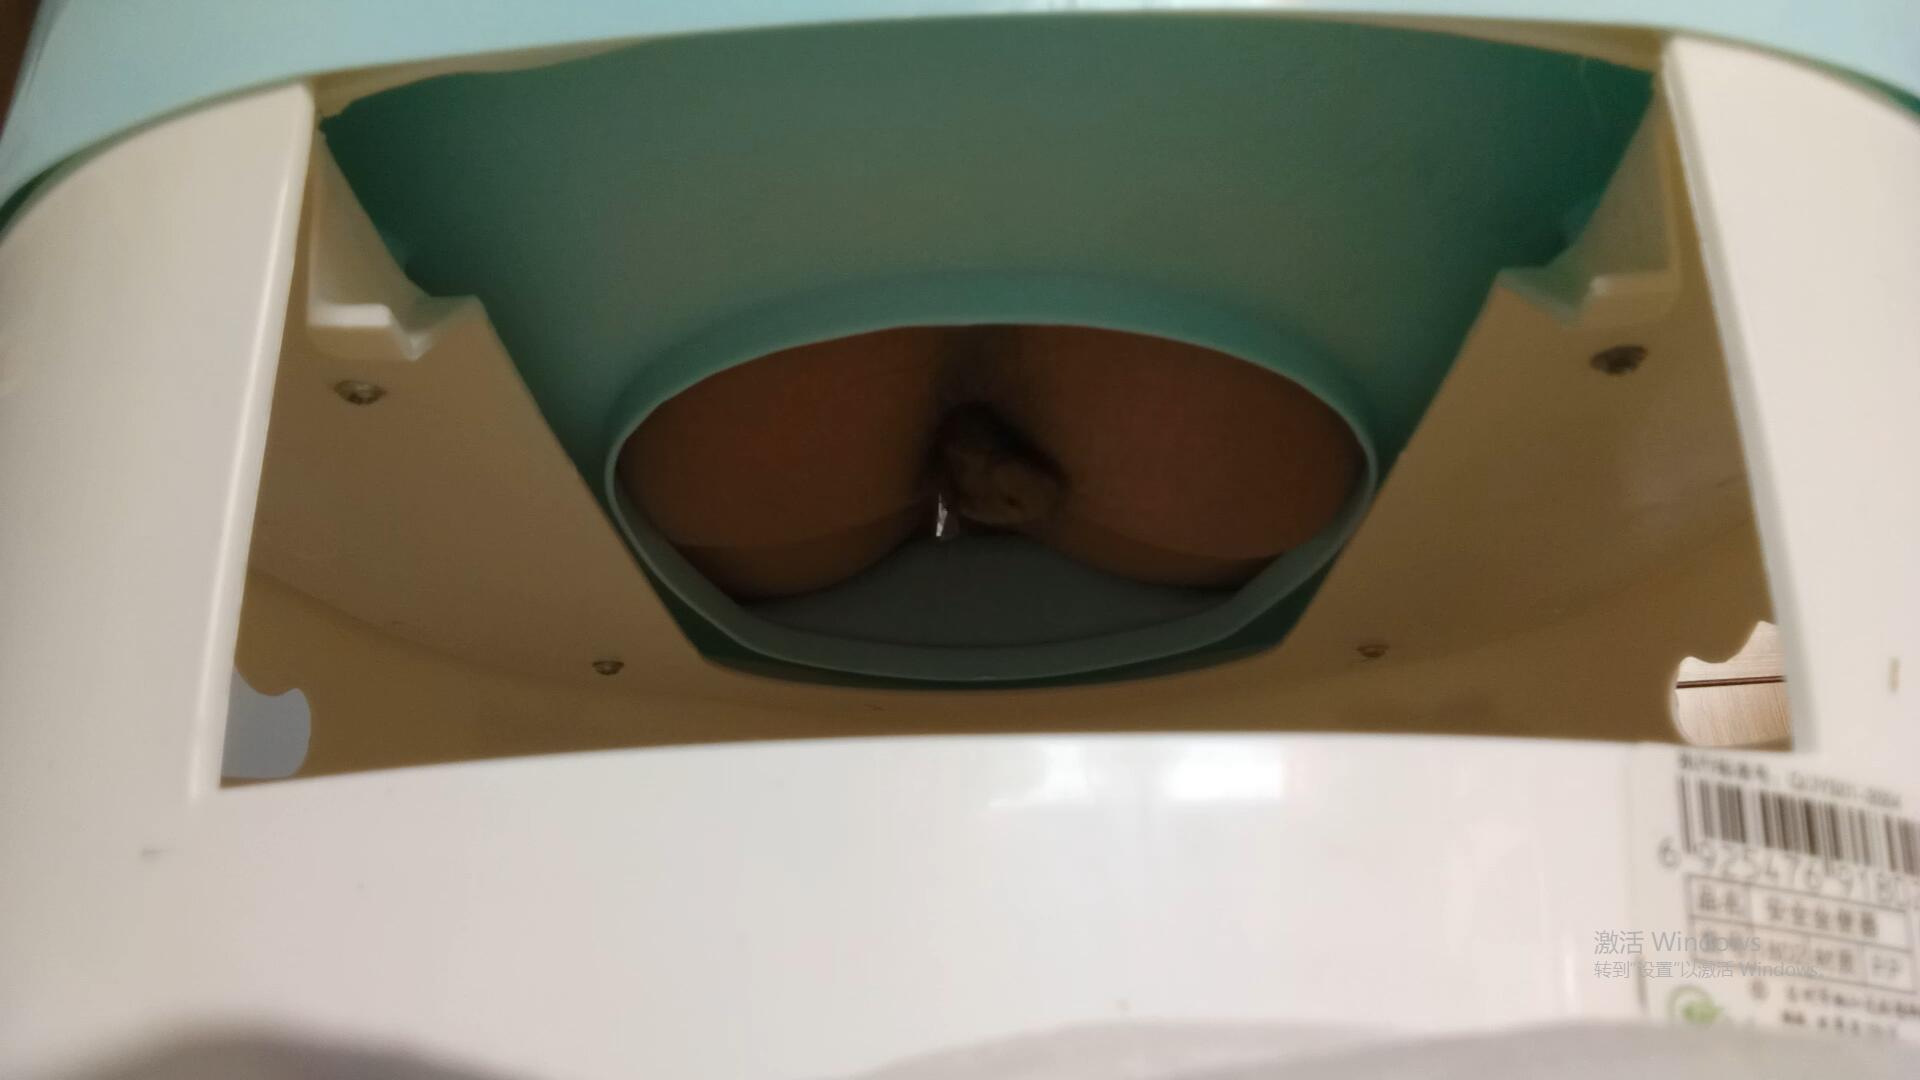 below the potty